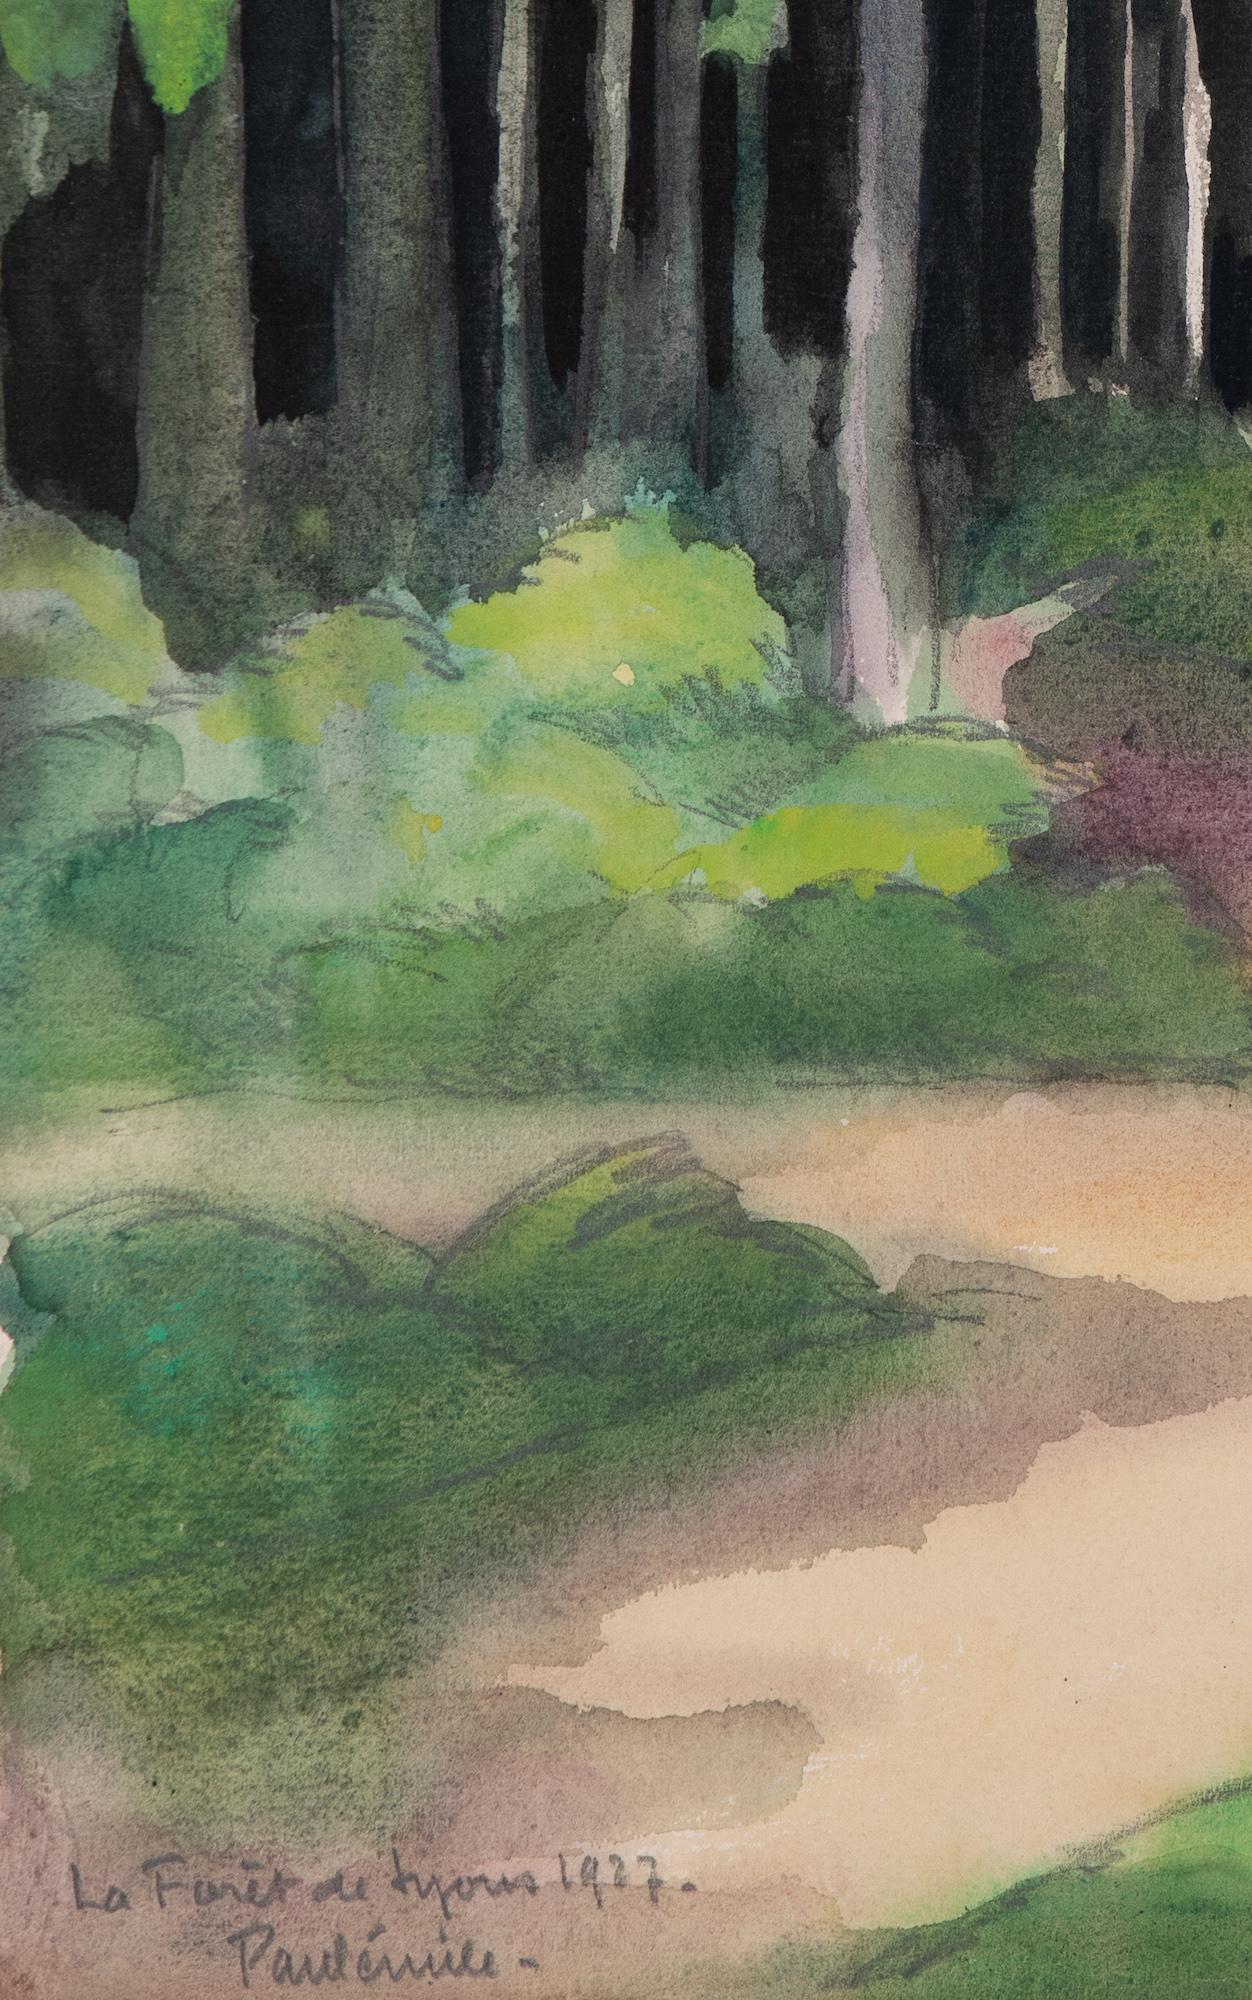 La Forêt de Lyons by Paulémile Pissarro (1884-1972)
Watercolour and crayon on paper
48.4 x 31.5 cm (19 x 12 ³/₈ inches)
Titled, date and signed lower left, La Forêt de Lyons 1927, Paulémile -

This watercolour depicts the forest de Lyons in France.